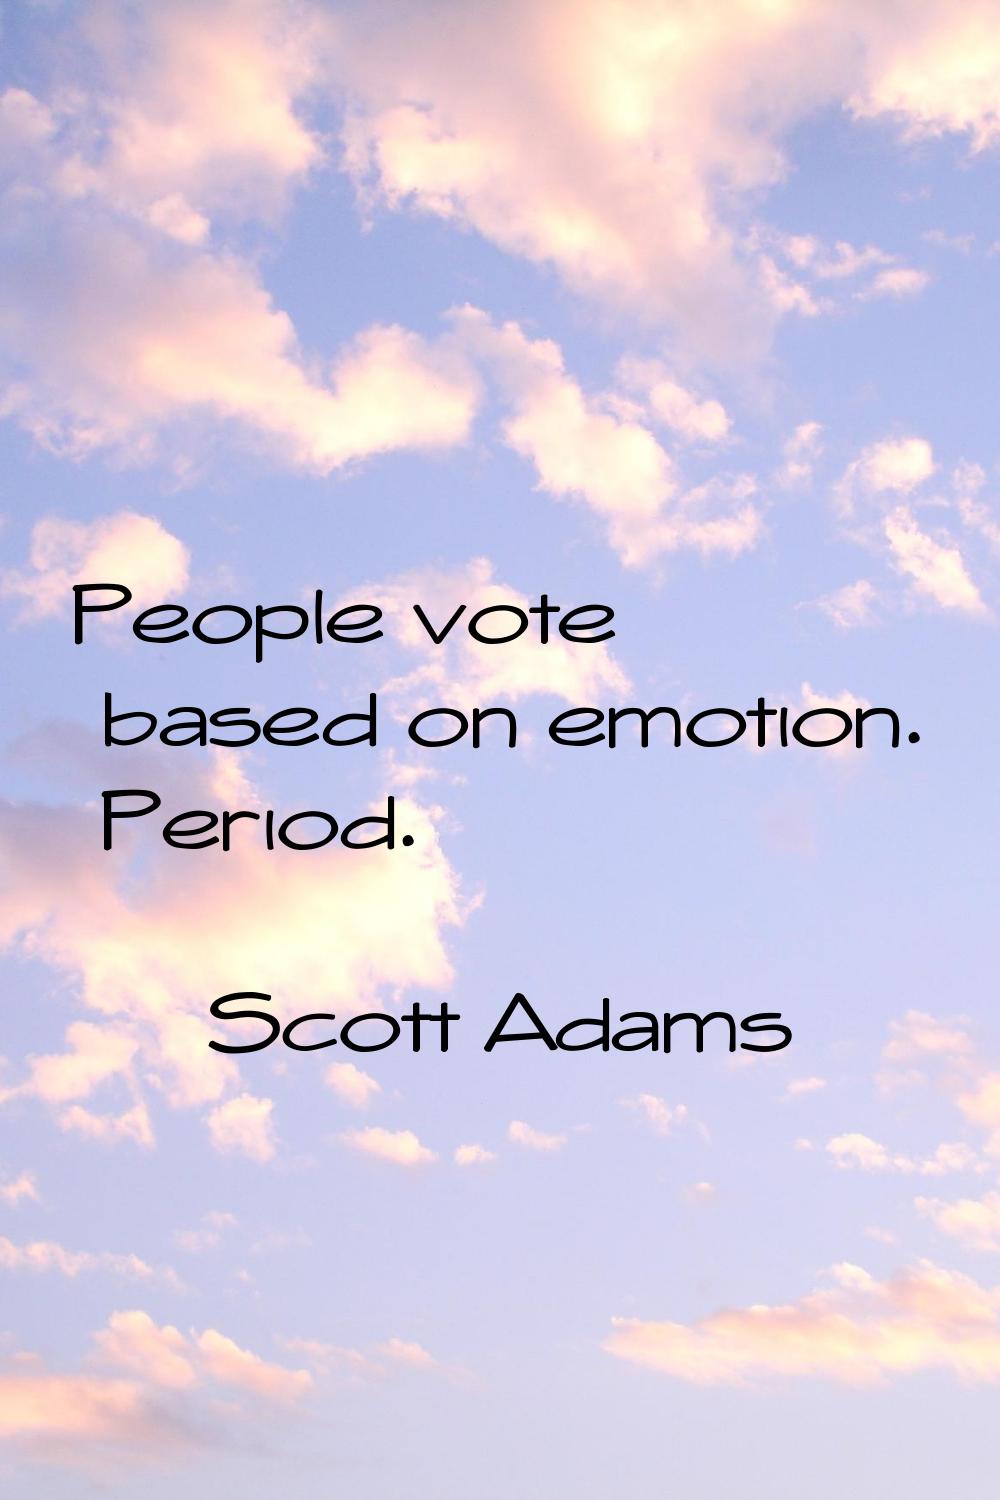 People vote based on emotion. Period.